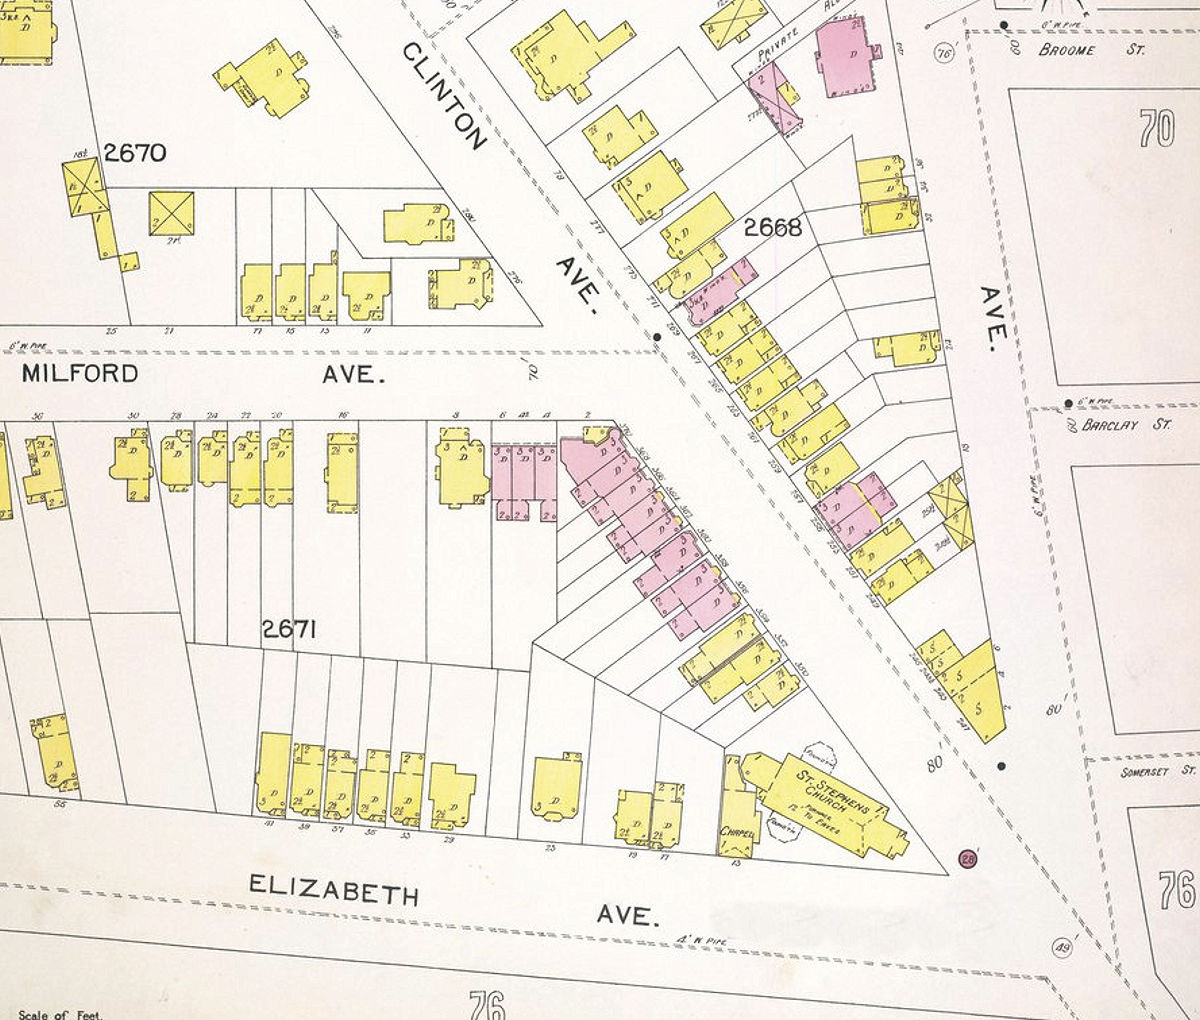 1892 Map
246 Clinton Ave. 
